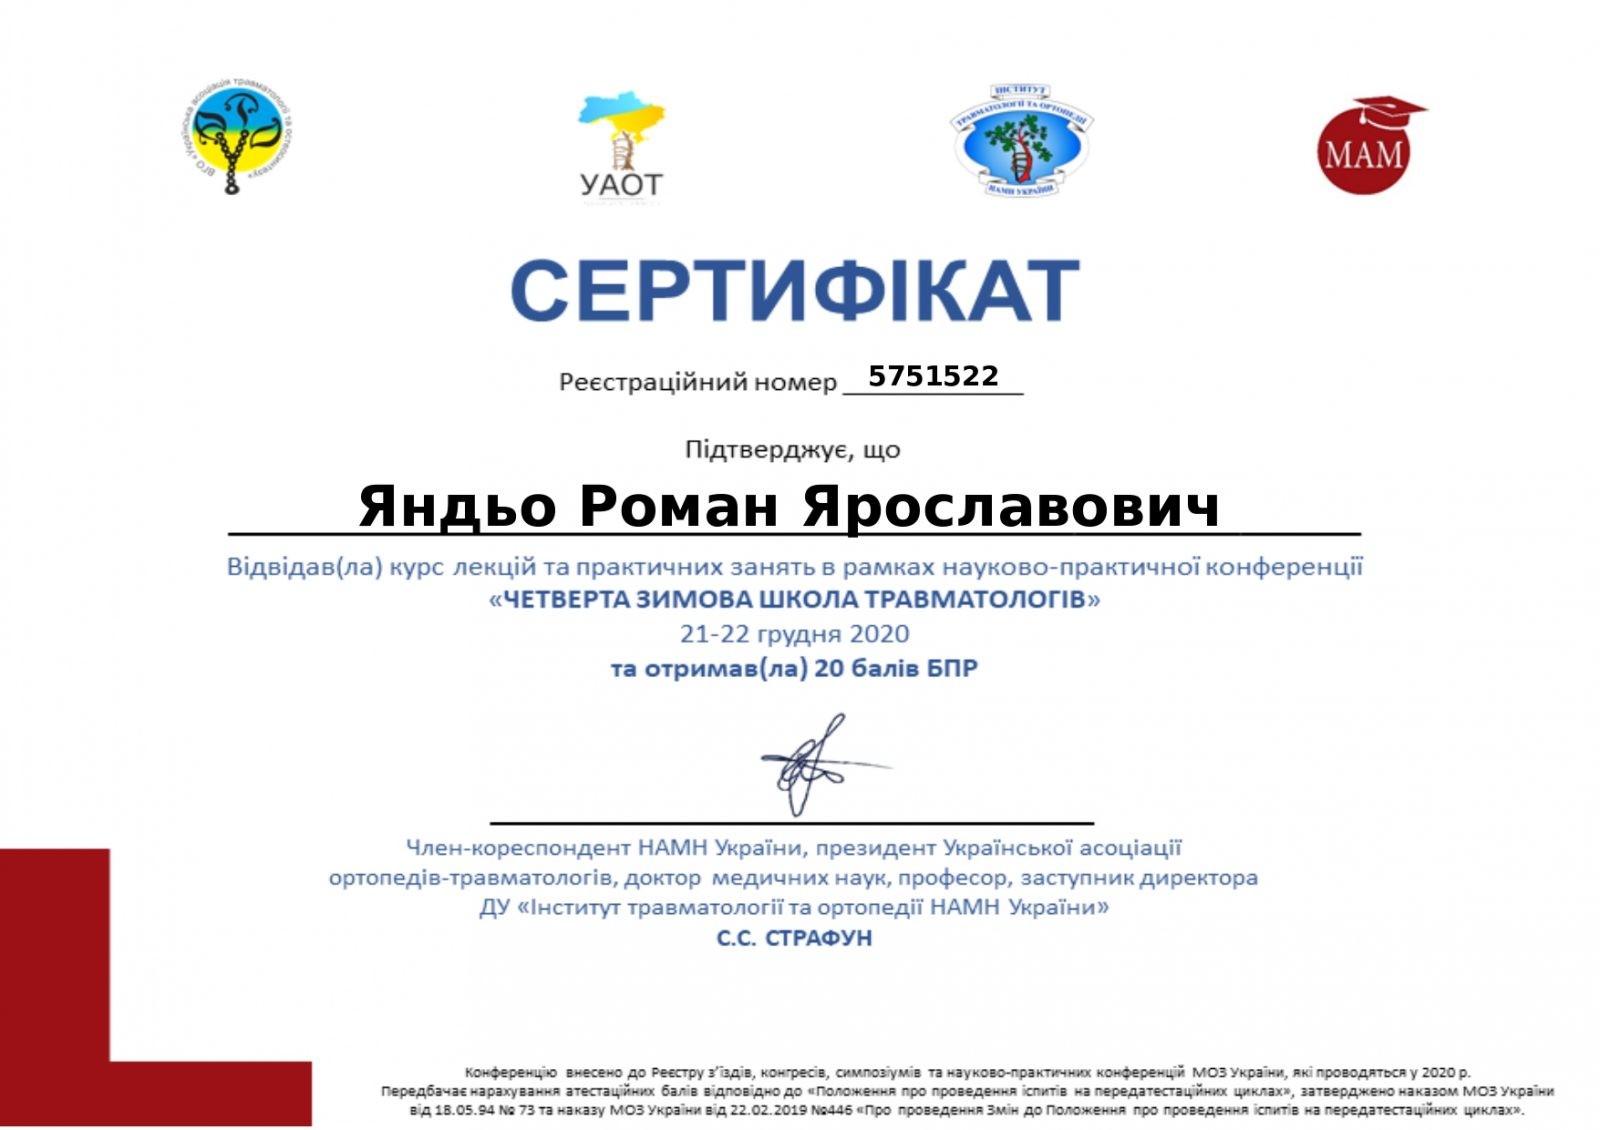 Яндьо Роман Ярославович Certificate